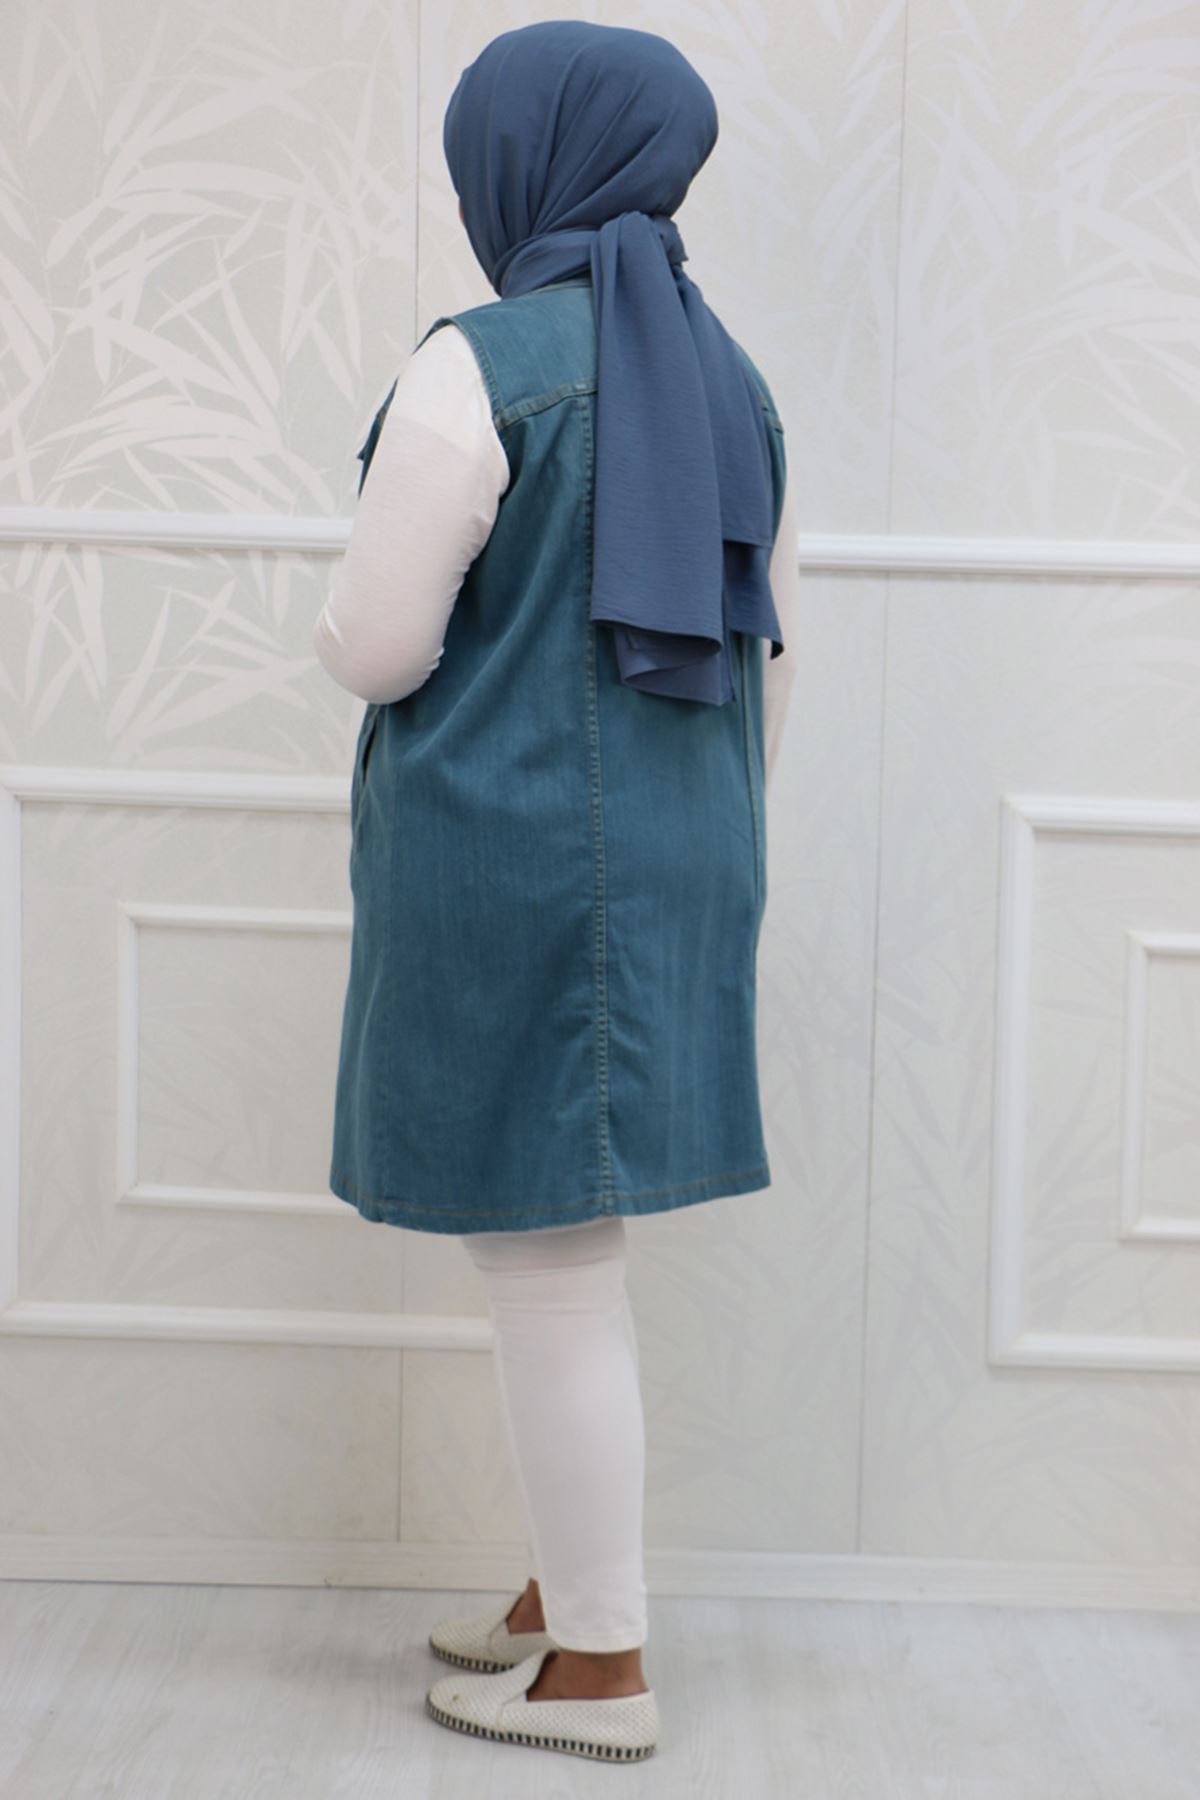 34003-1 Large Size Denim Vest with Grinding Nails - Cold Blue